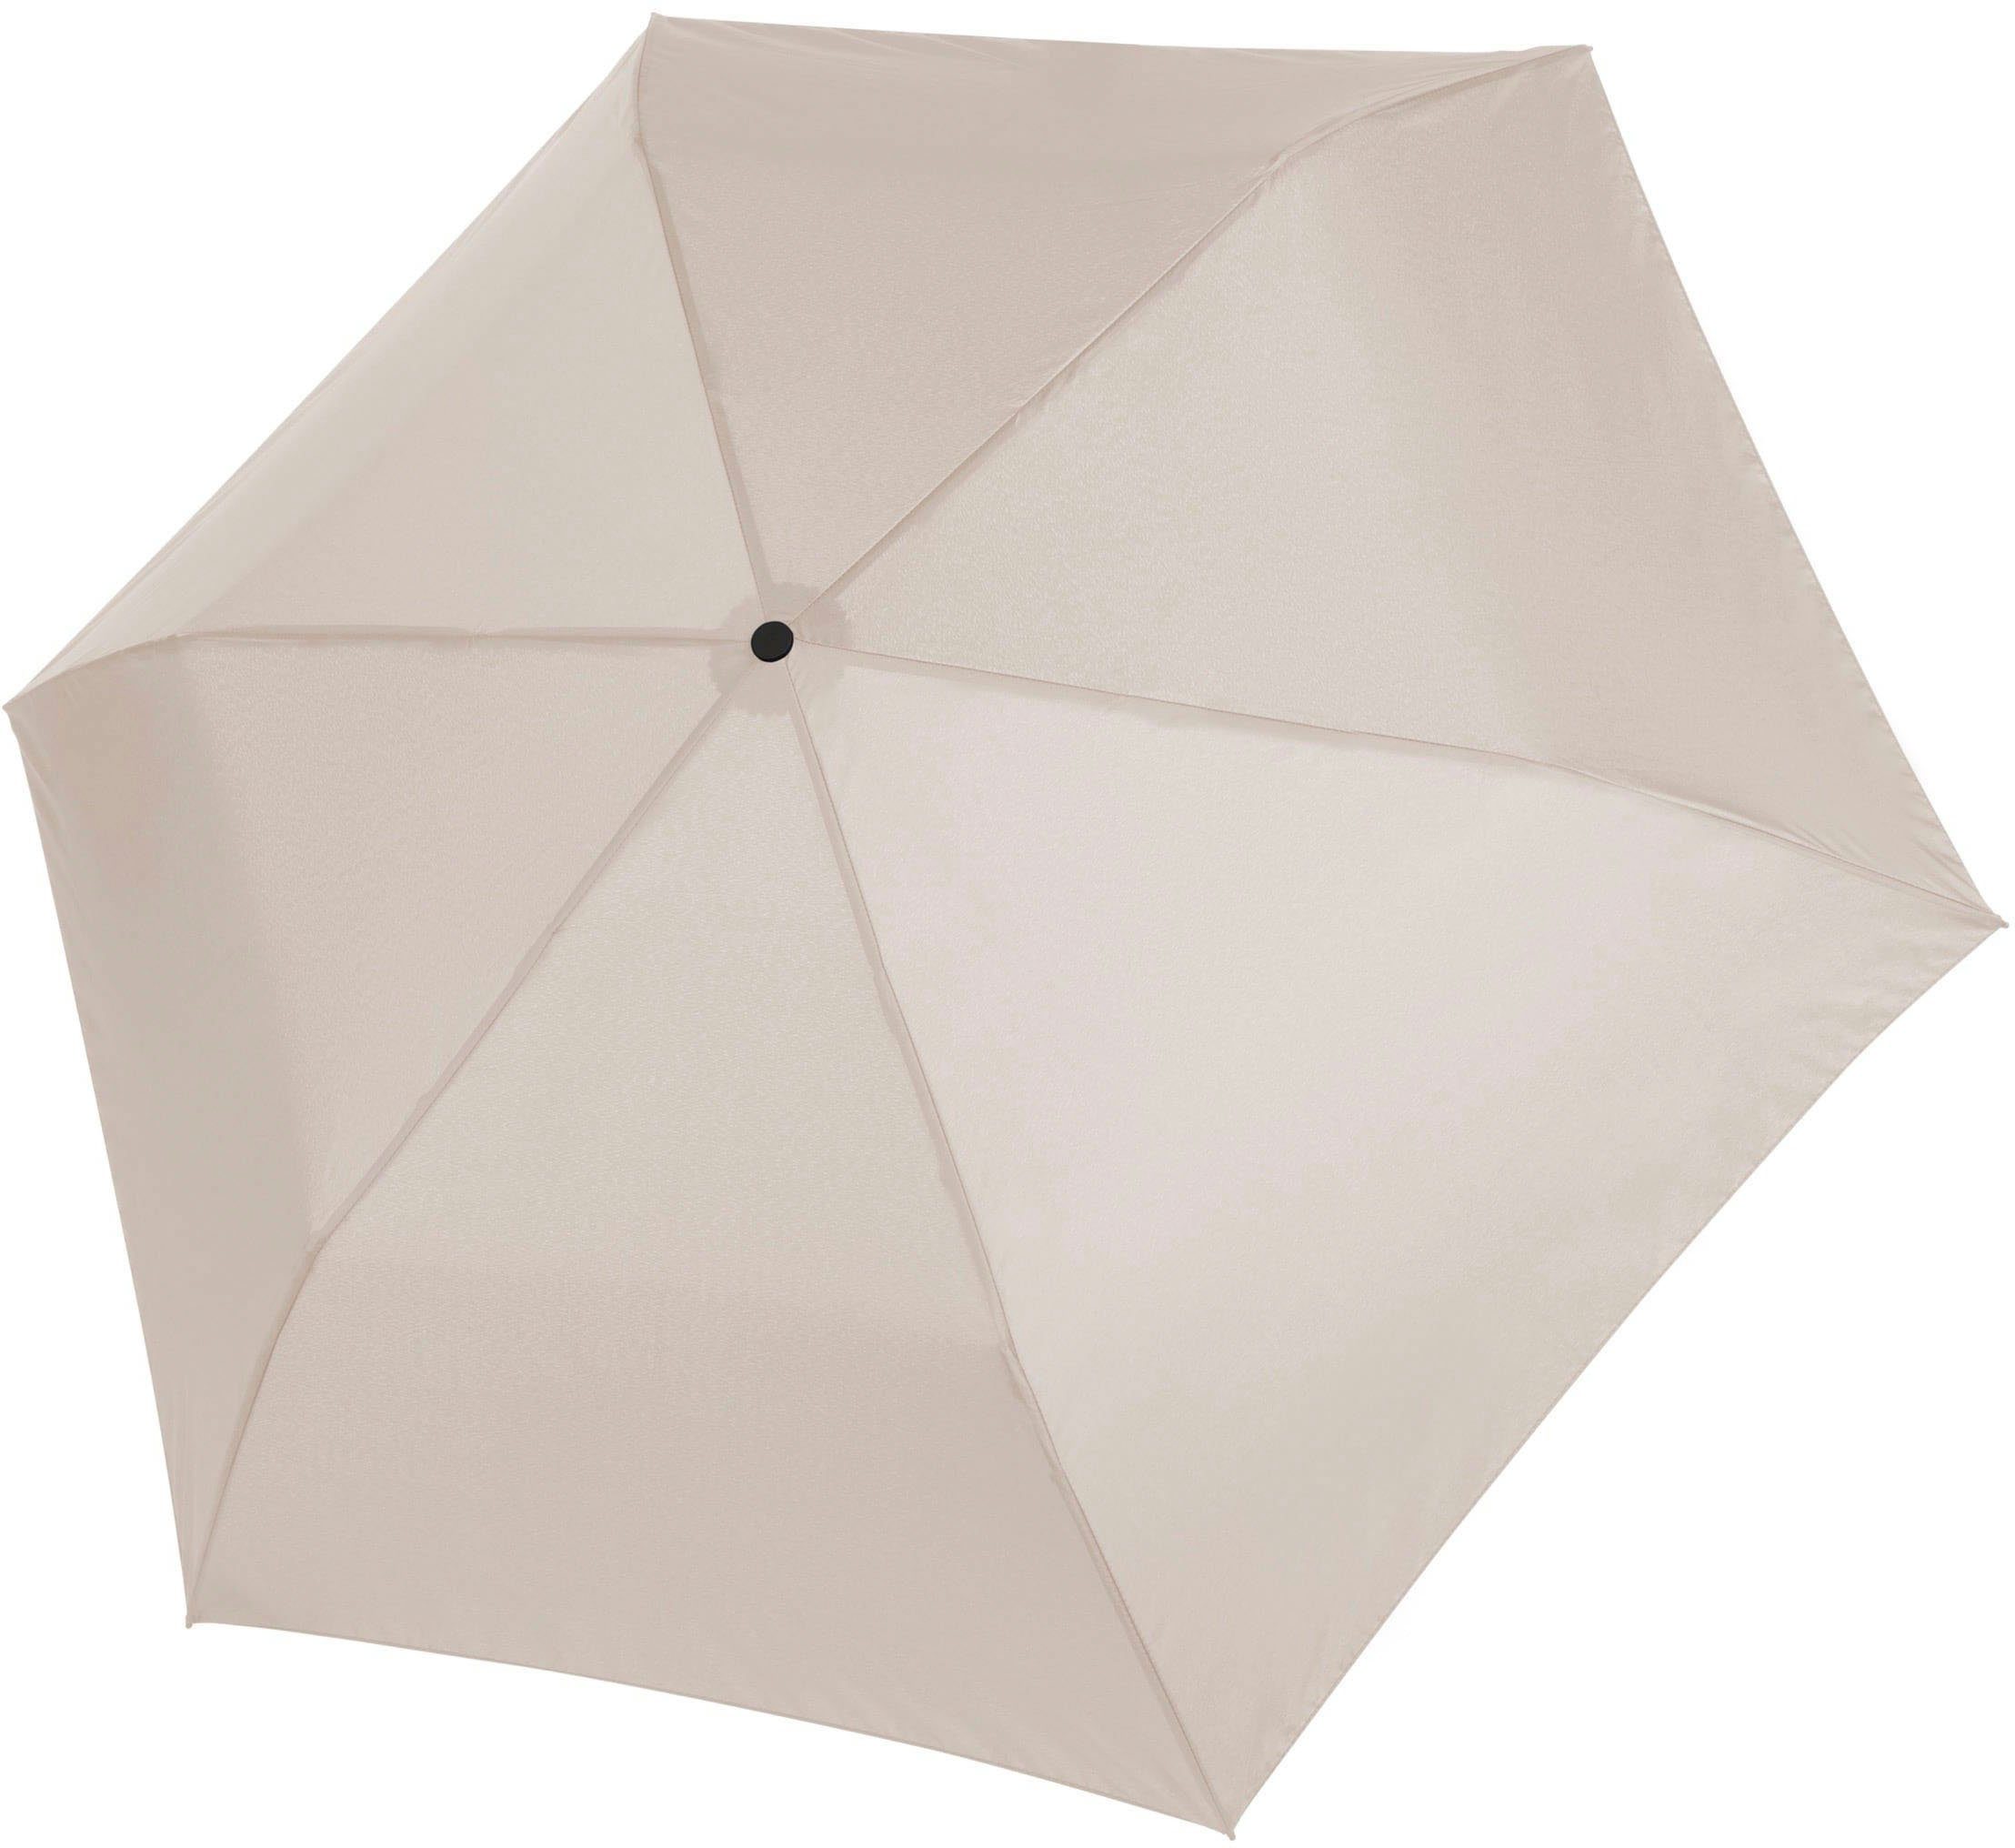 Taschenregenschirm harmonic beige uni, Magic zero doppler®